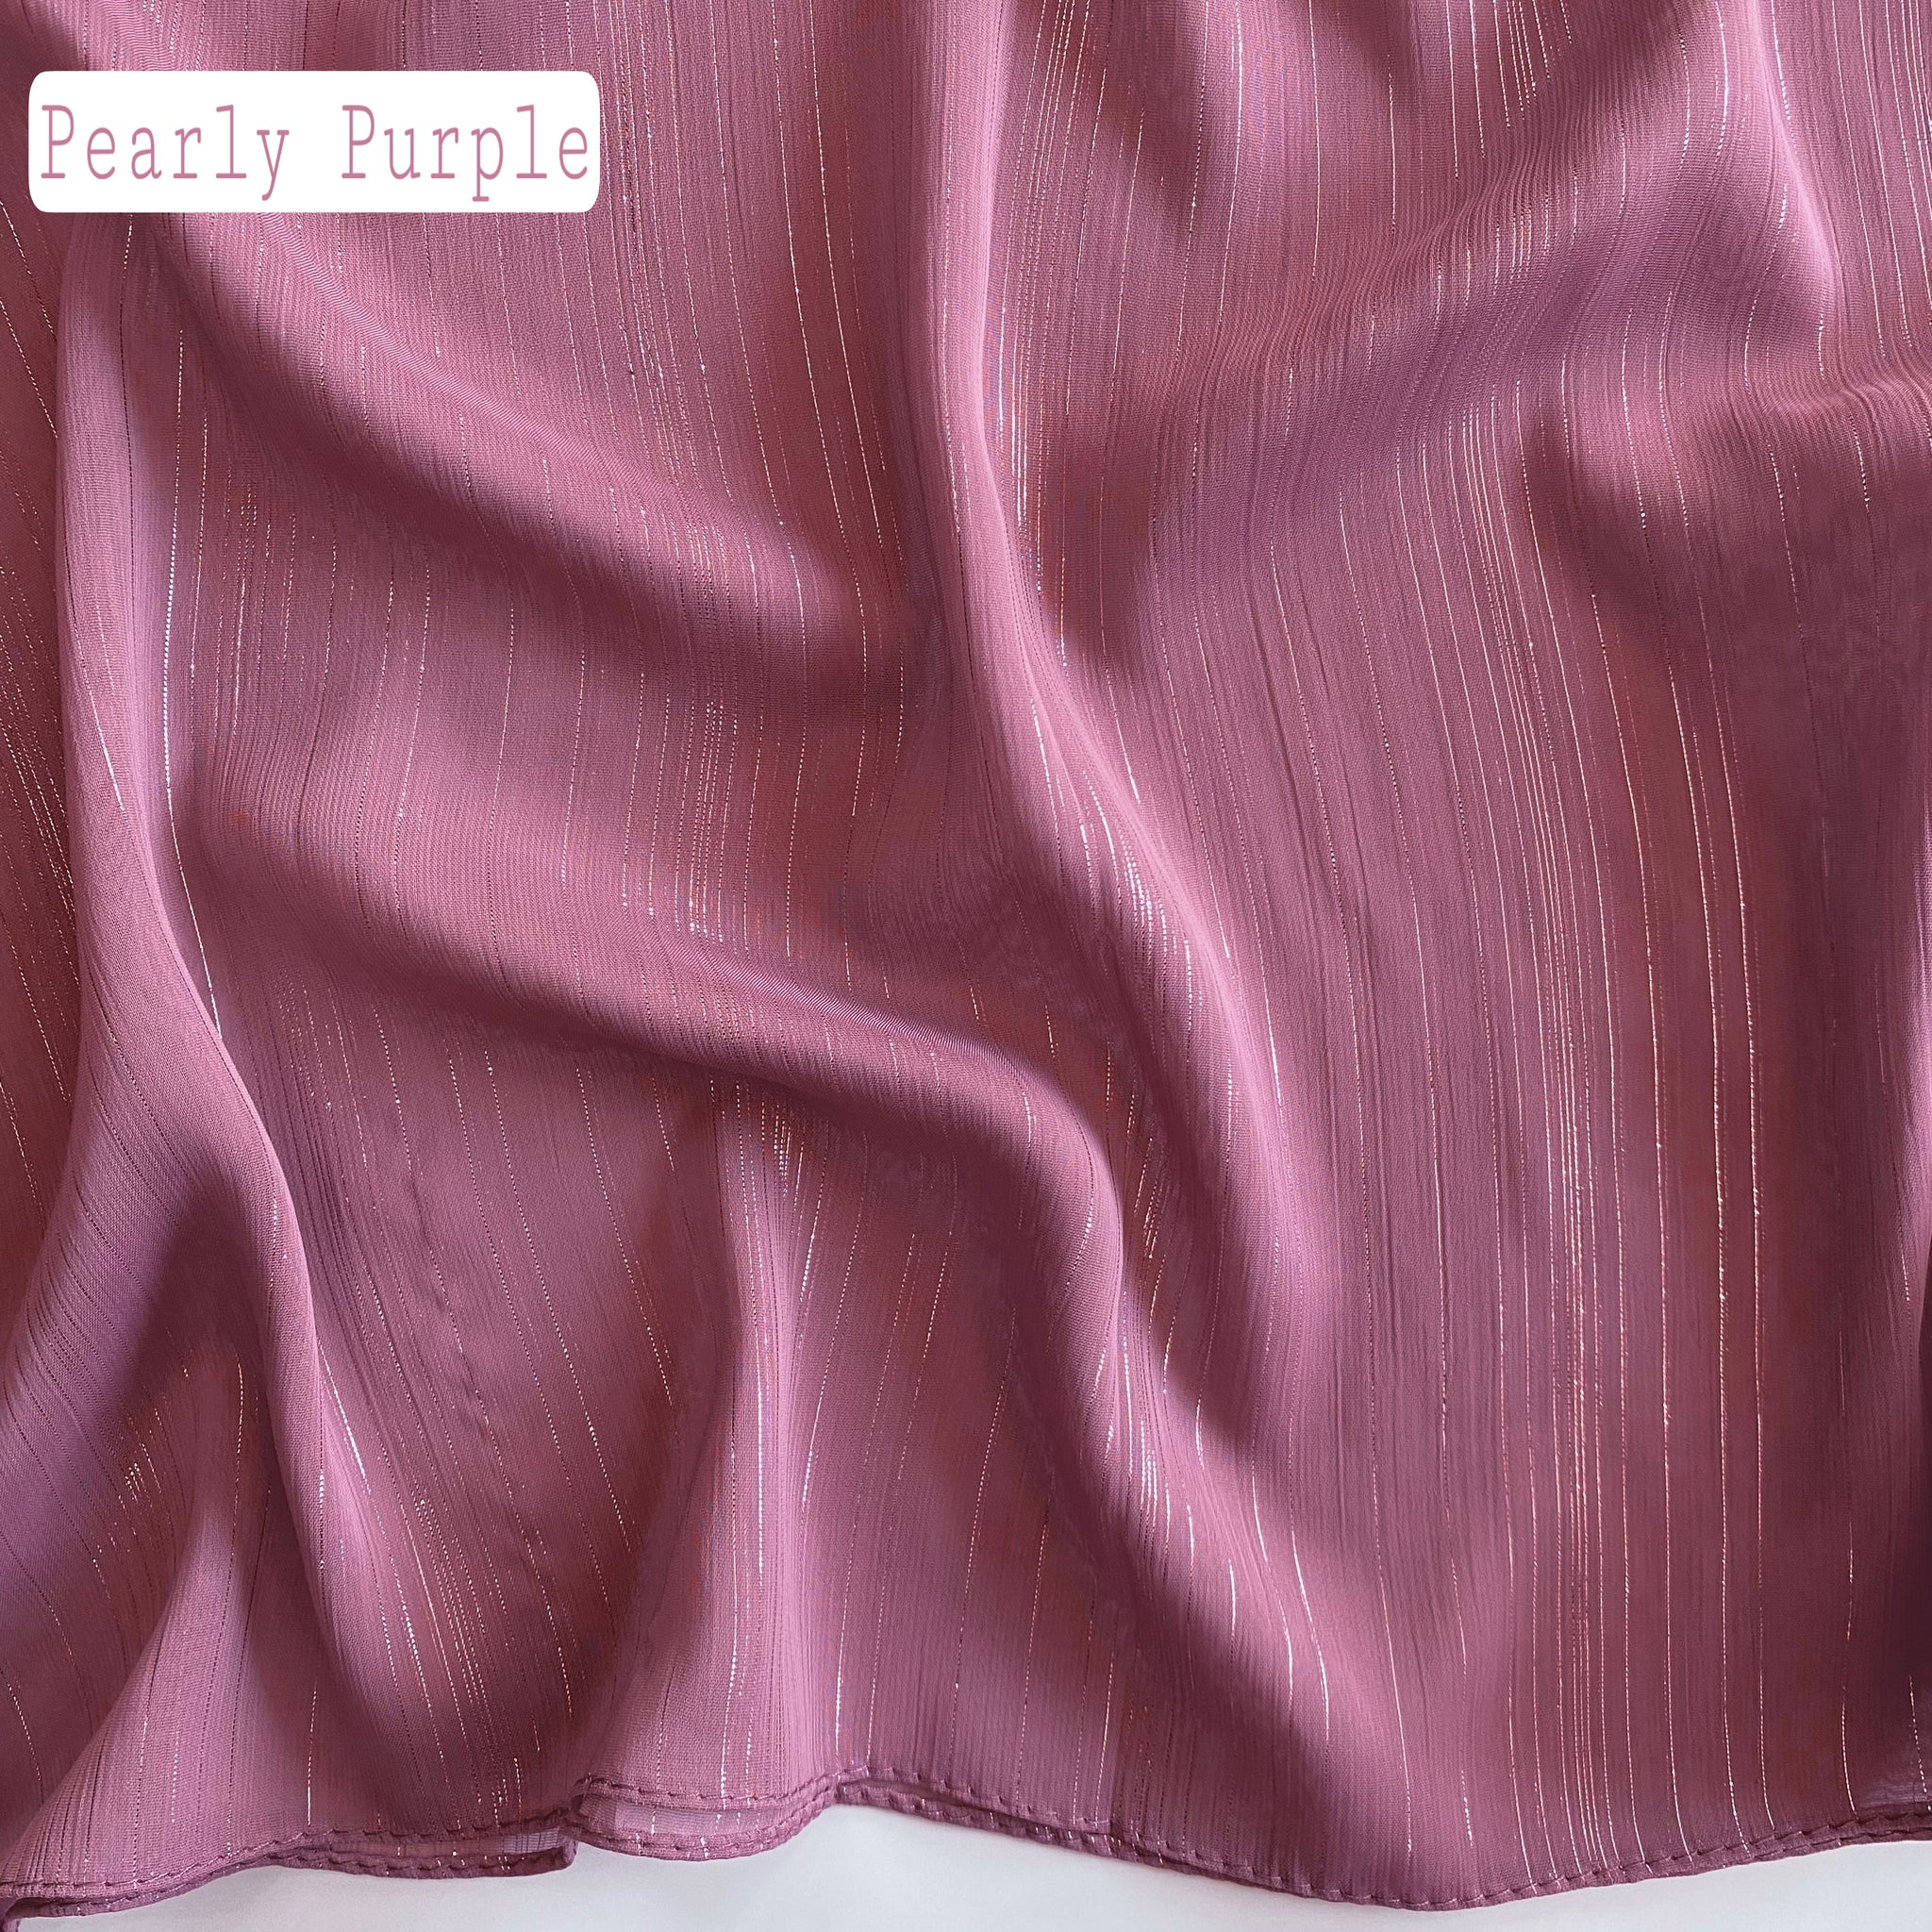 Glossy Streaks – Pearly Purple